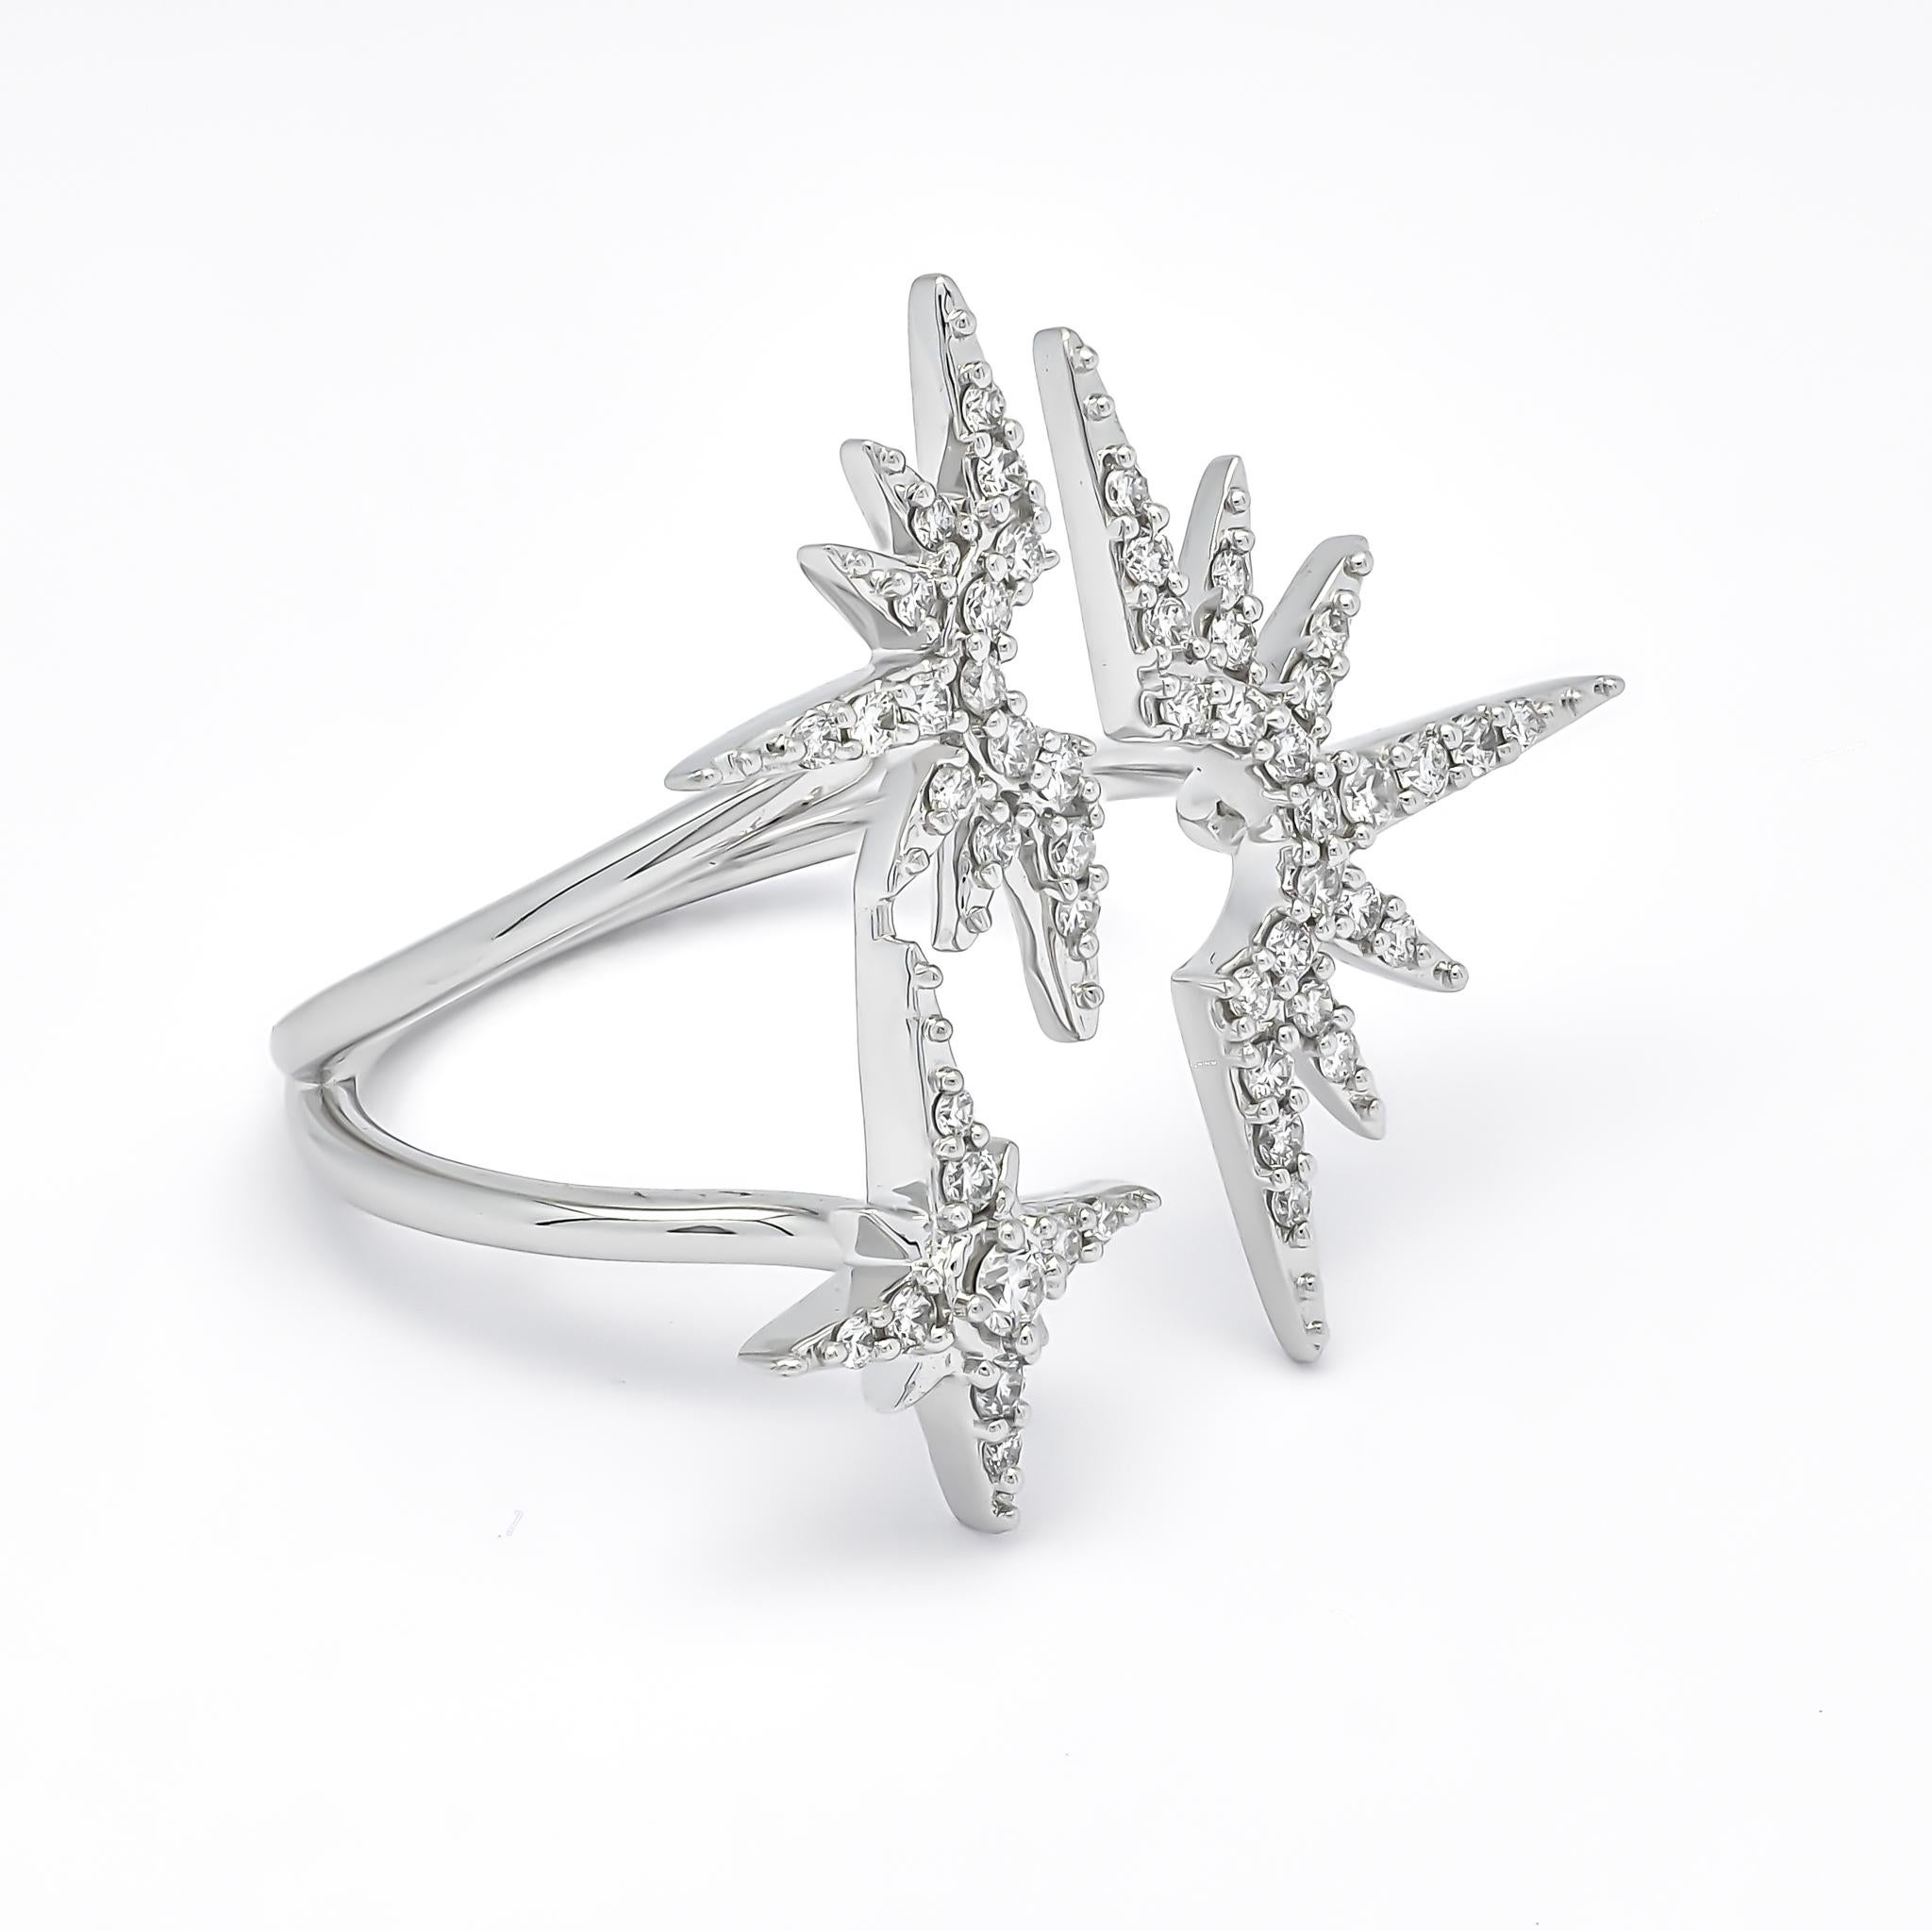 For Sale:  18KT White Gold Diamonds Star Burst Statement Ring R085743, Dainty Luxury Ring 2